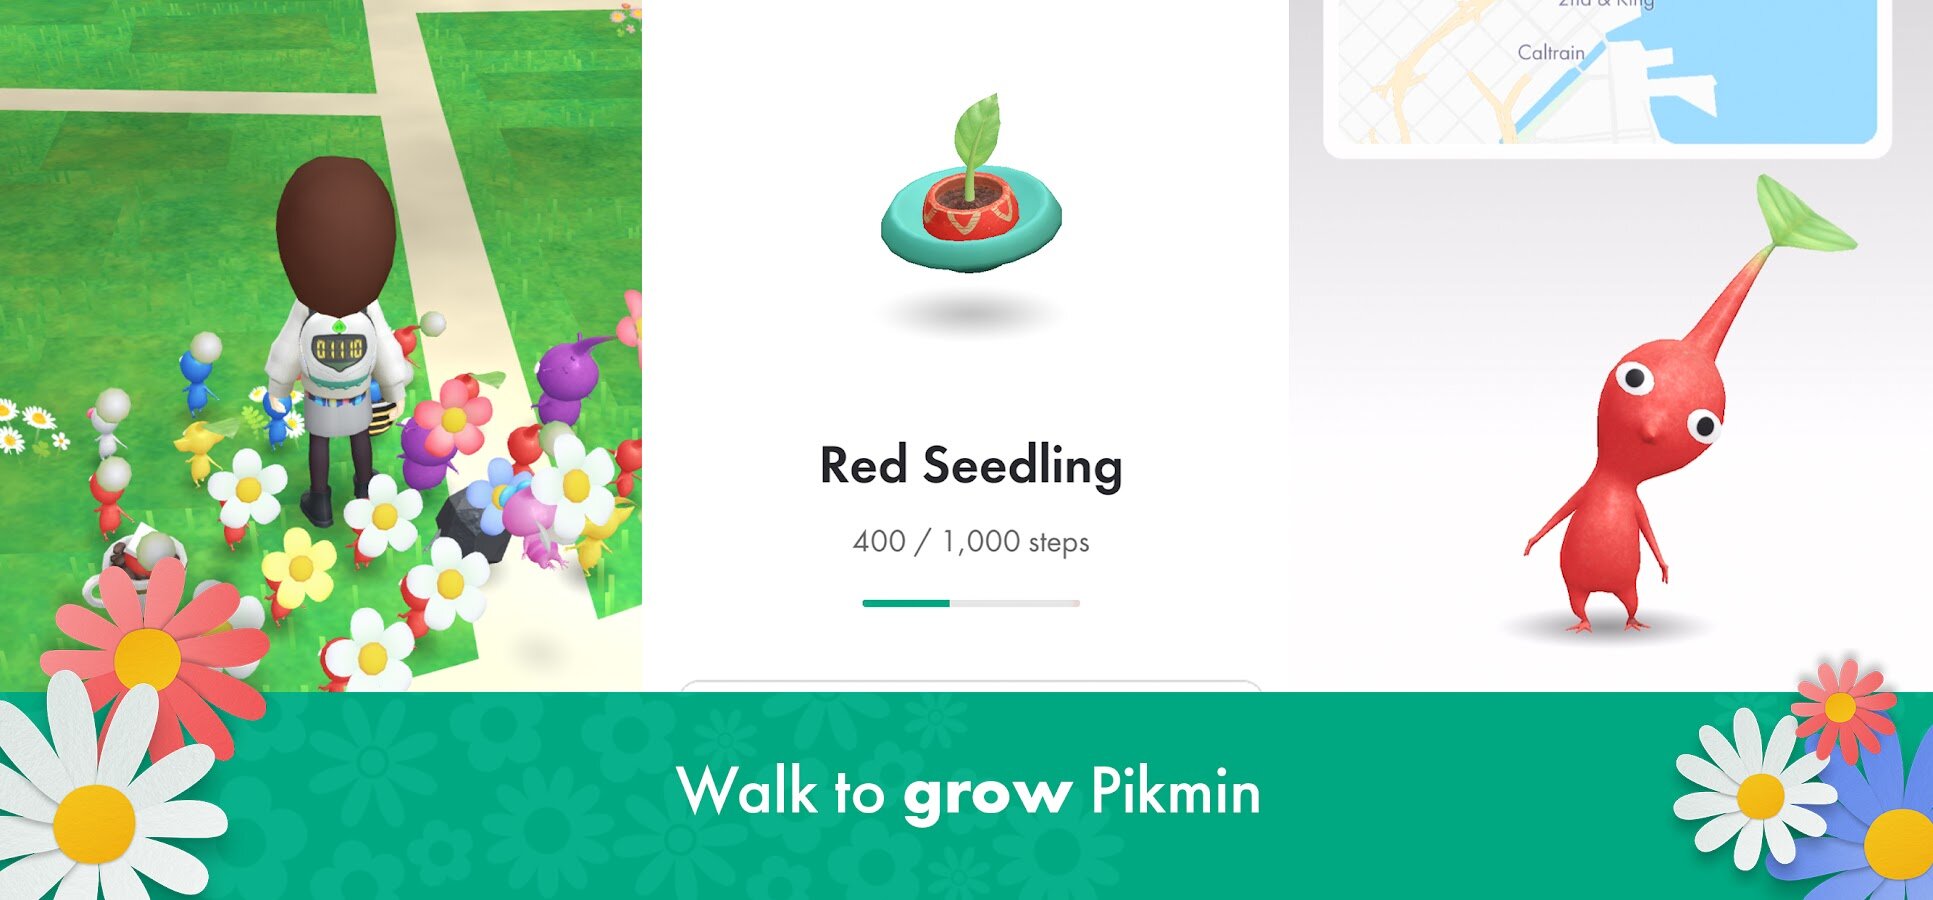 Pikmin Bloom 89.0